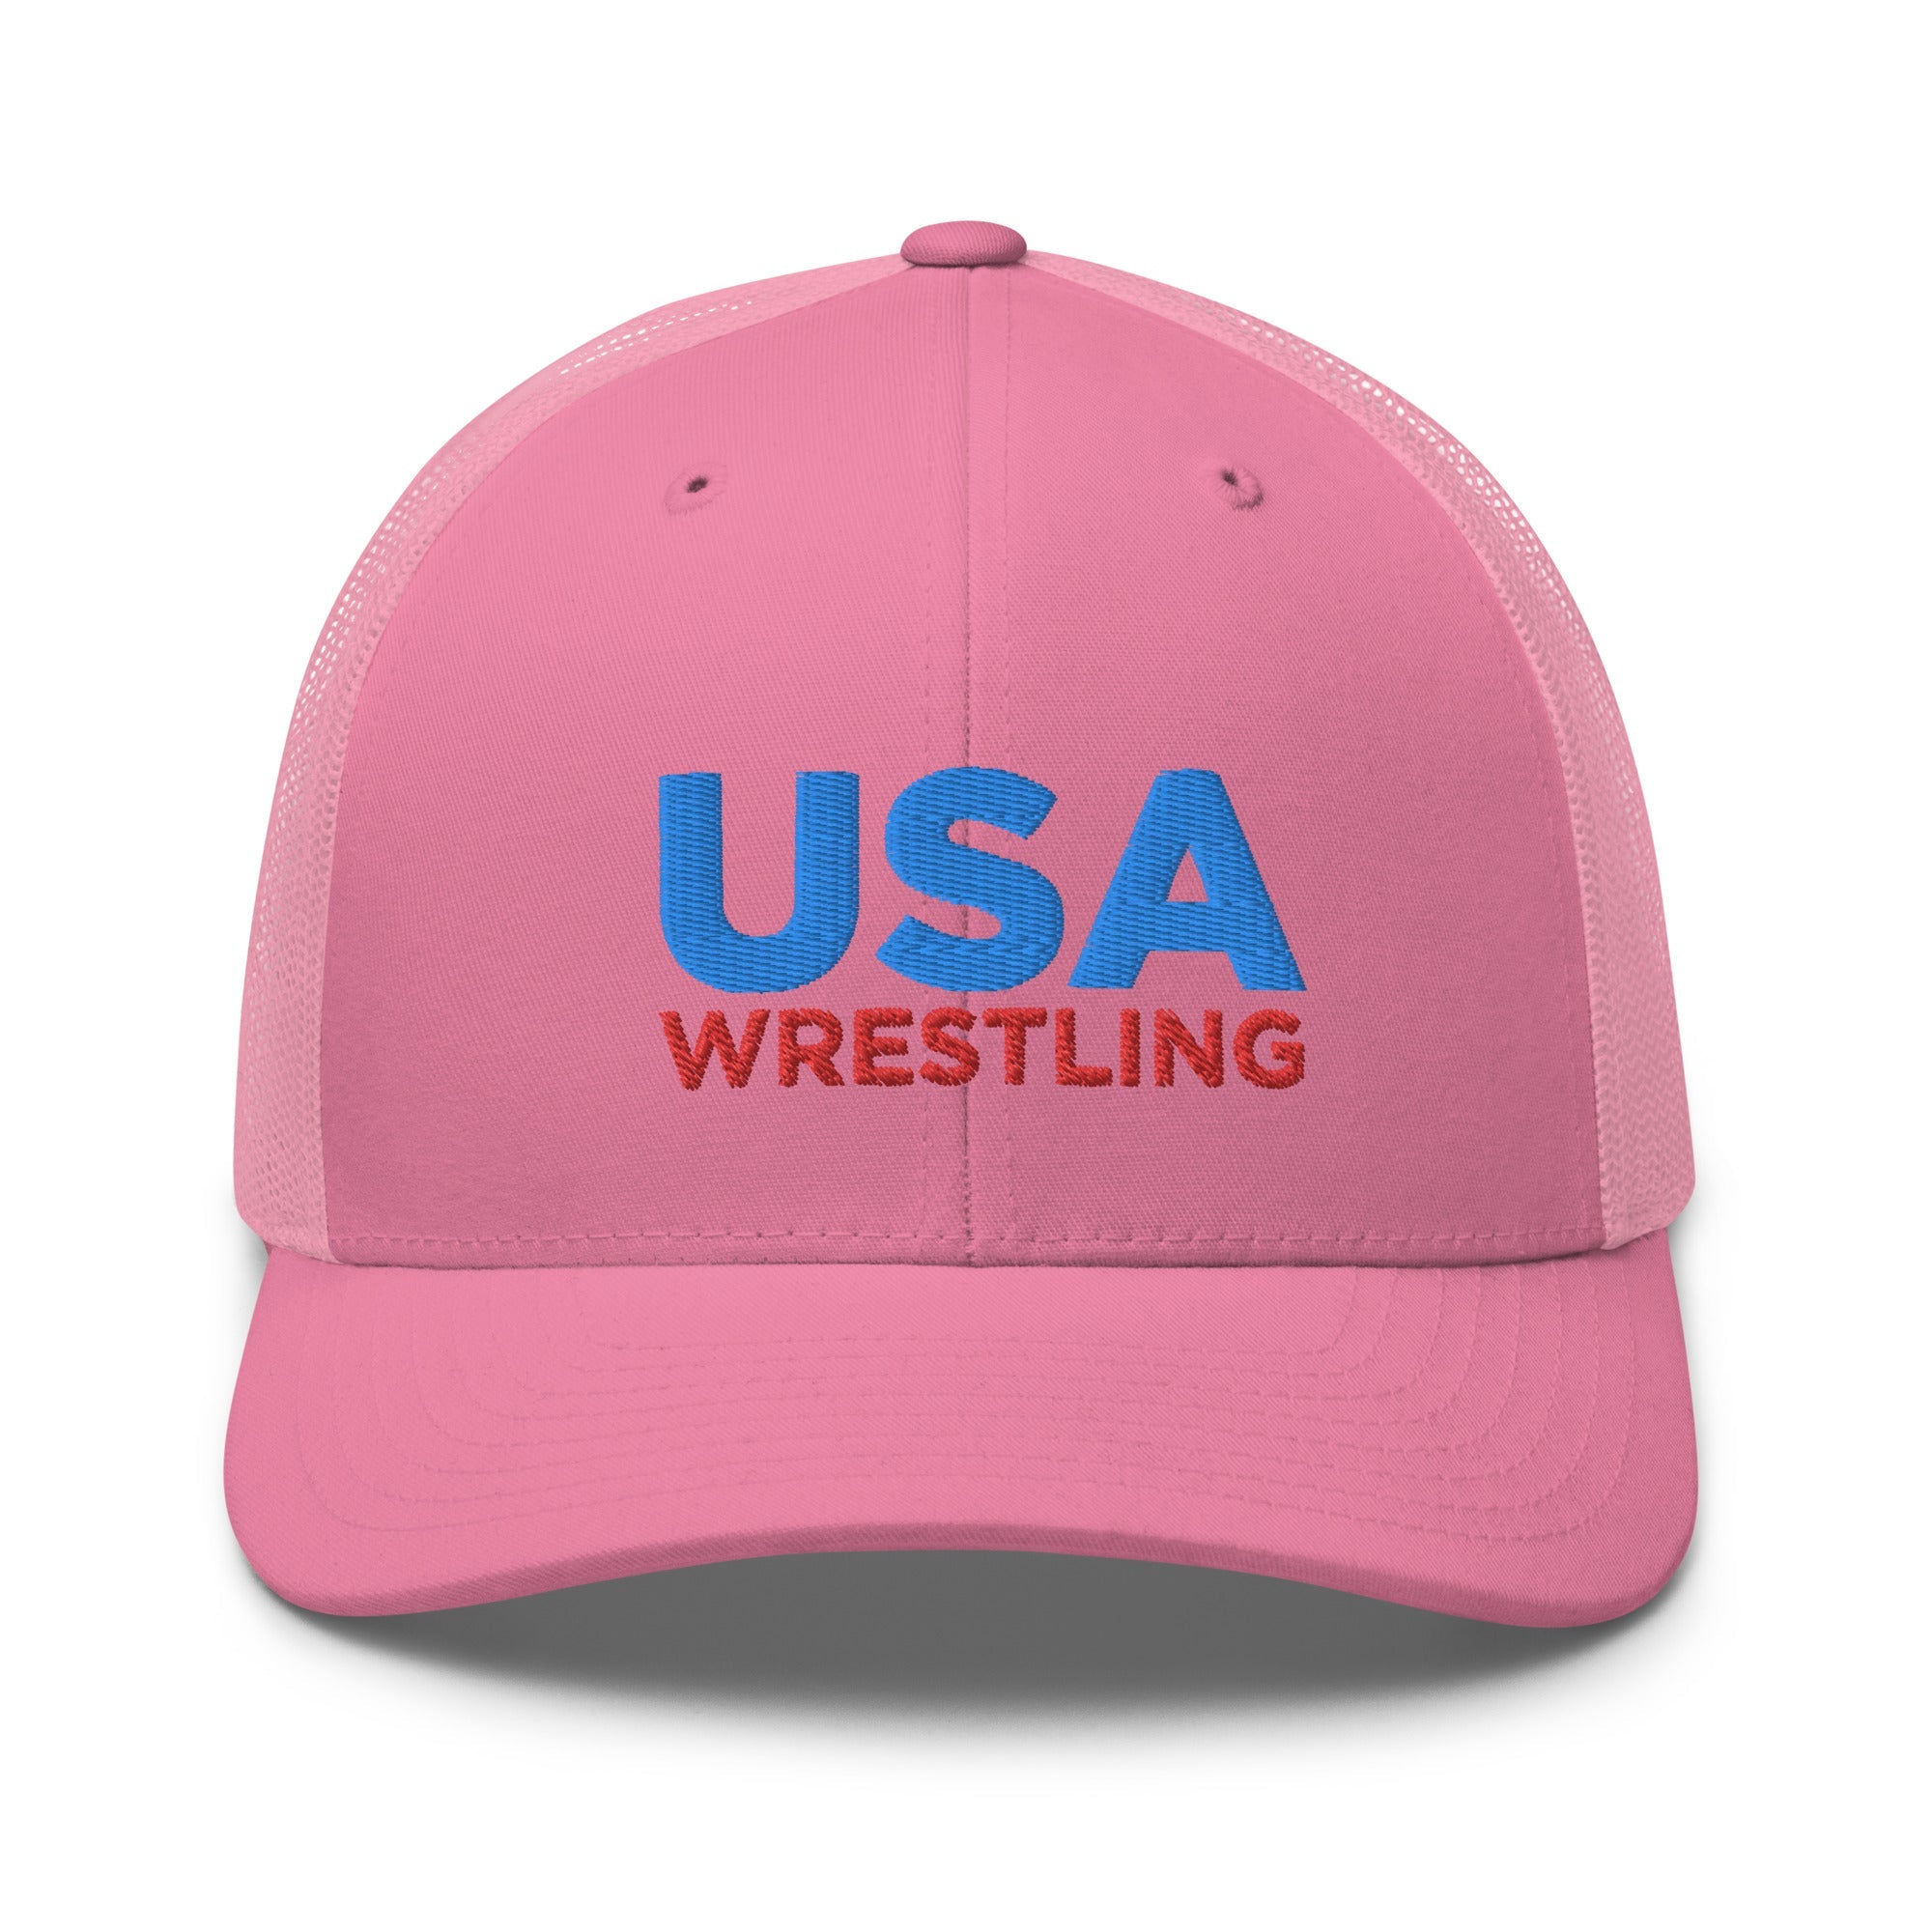 USA Wrestling Trucker Cap Iron Fist Wrestling Retro Trucker Hat, USA Wrestling